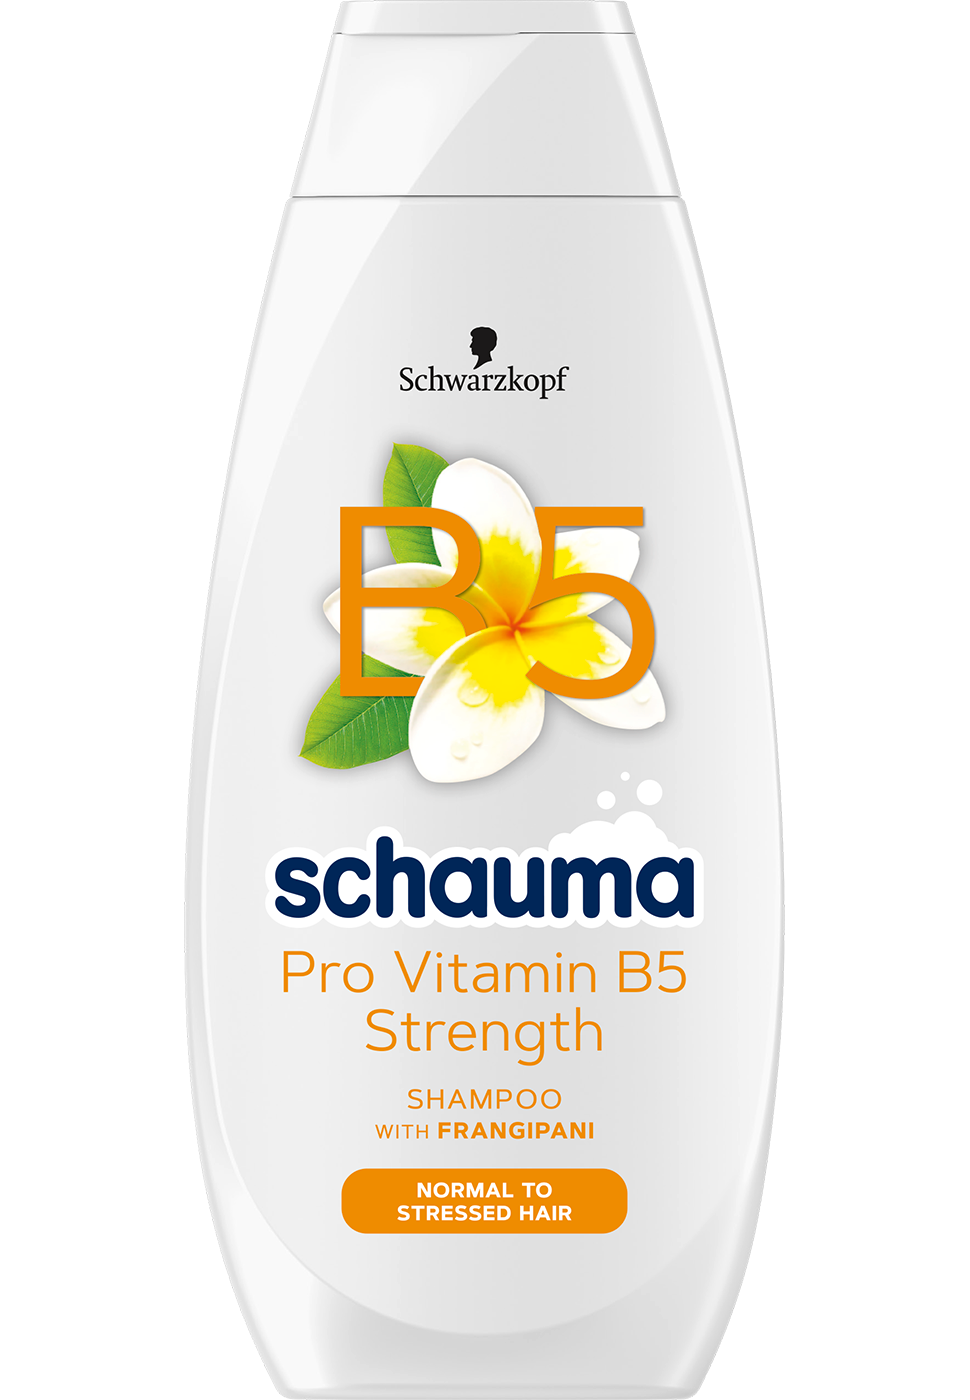 Pro Vitamin B5 Strength